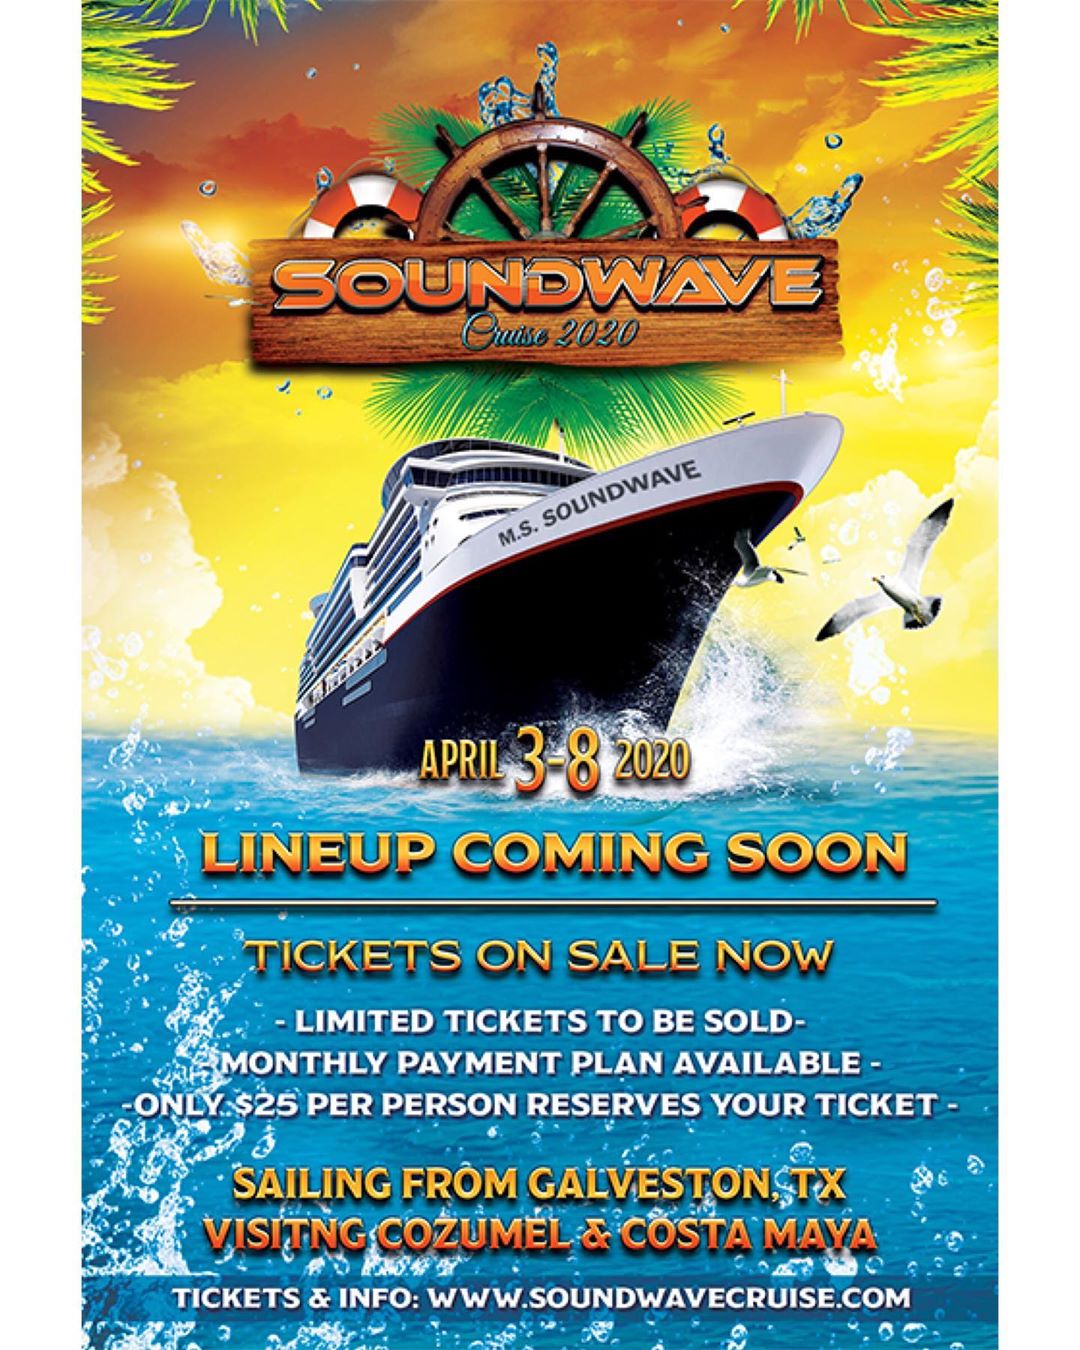 SoundWave Cruise Promo Code 2020, Texas, Galveston, Cozumel, Costa Maya, Royal Caribbean, EDM, Party Cruise, Discount Tickets, VIP Passes, General Admission